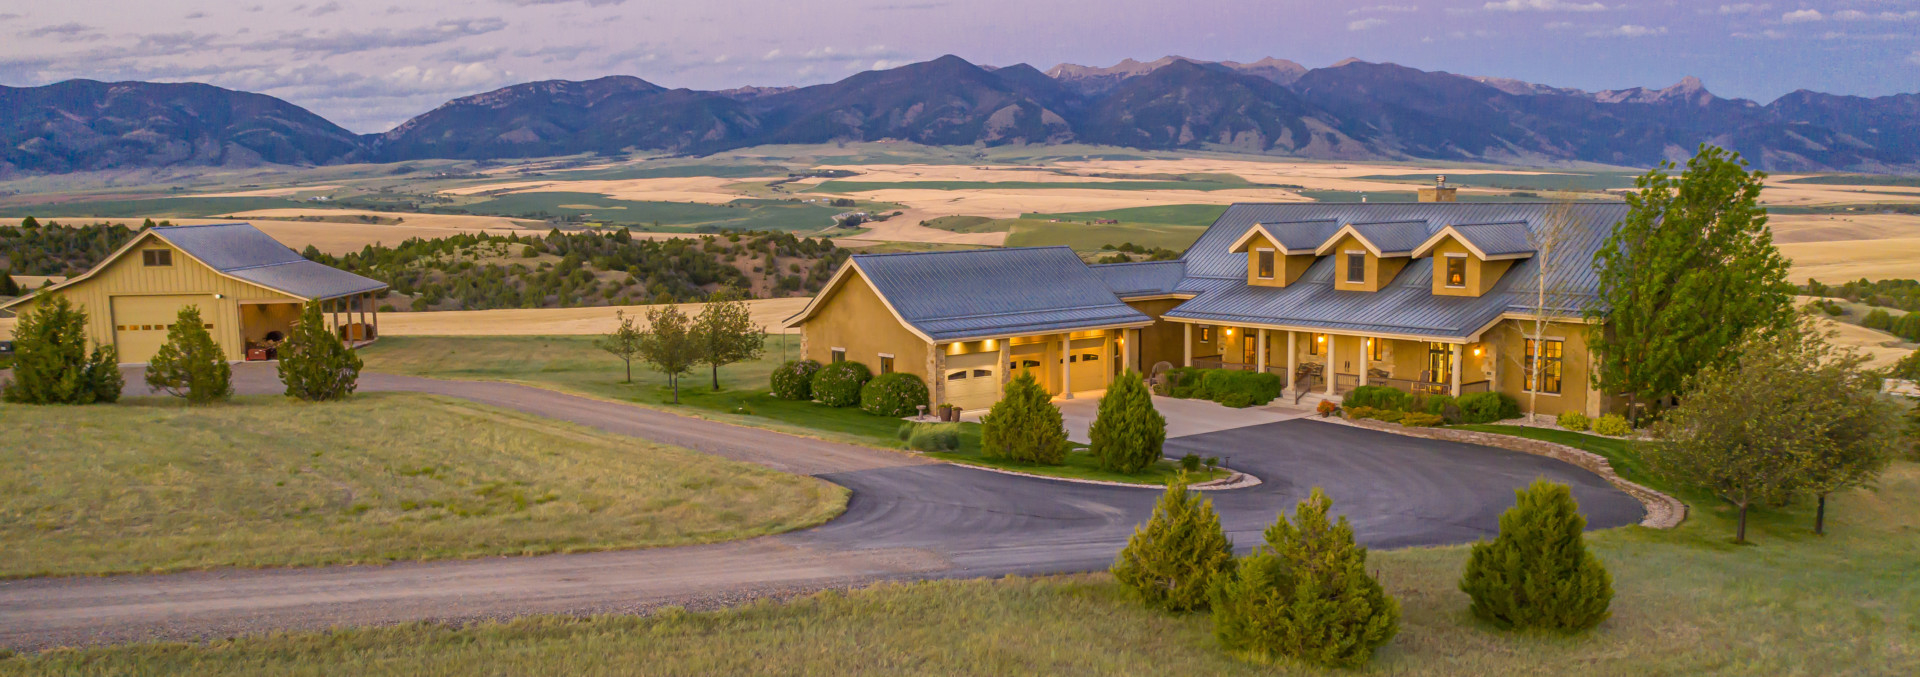 montana home for sale bridger view country estate